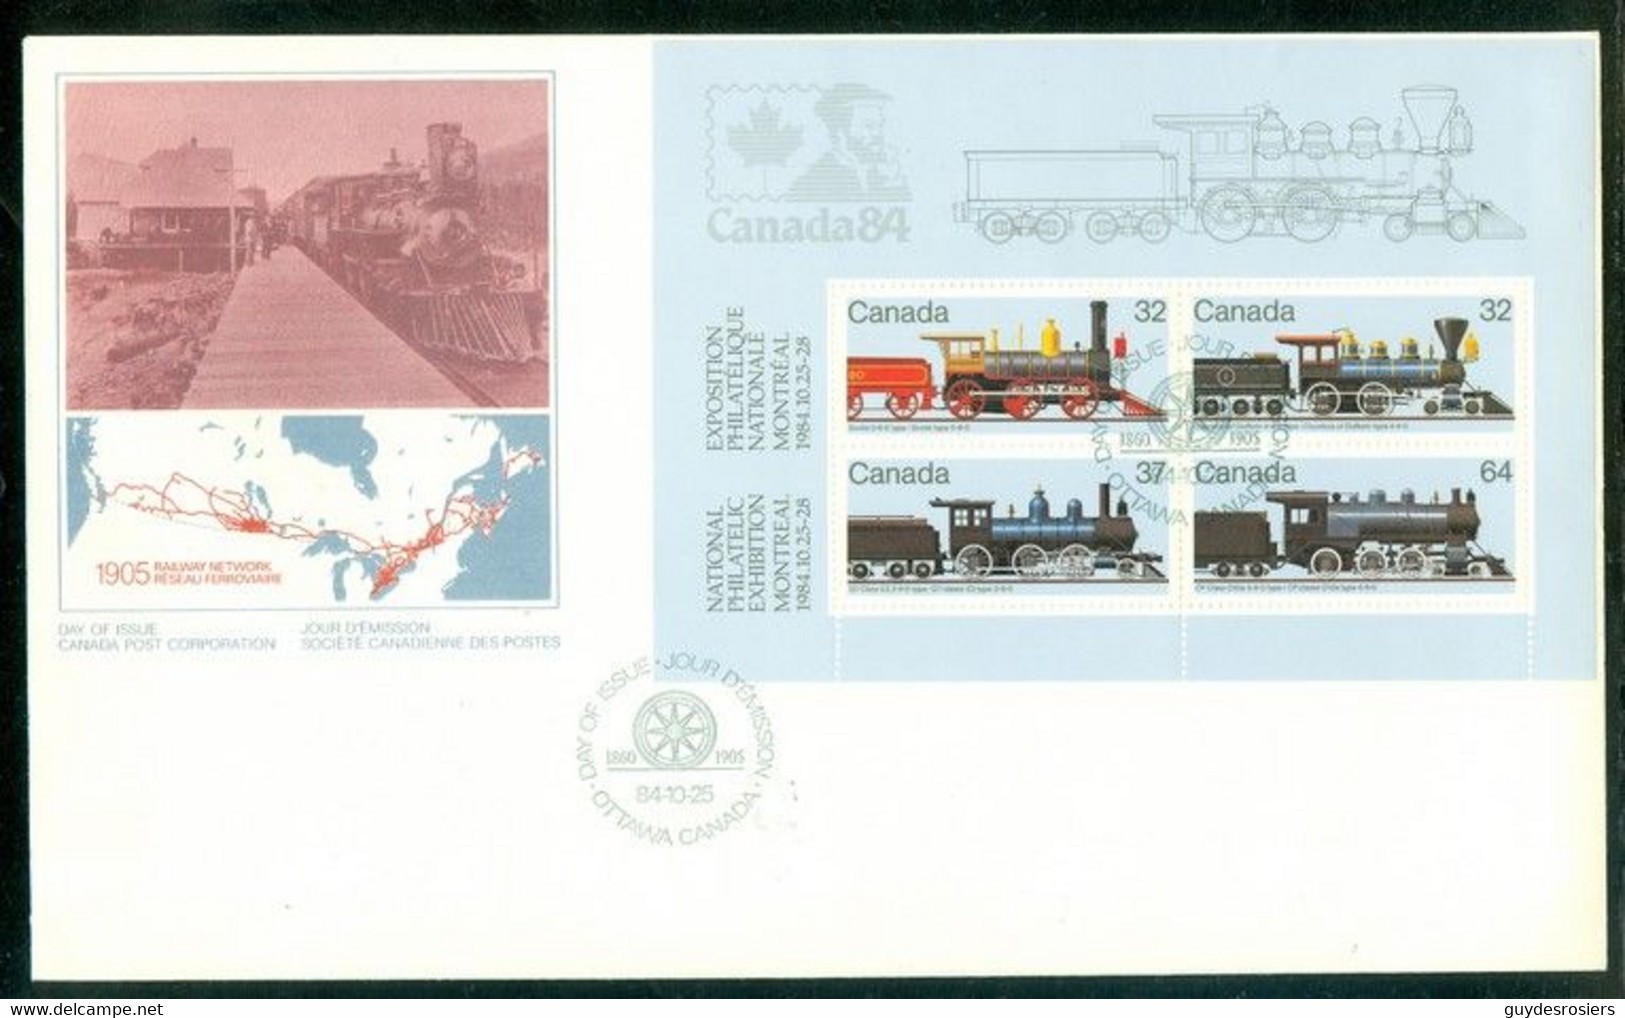 Train + Locomotive; Timbres Scott # 1036-9 Stamps; Pli Premier Jour / First Day Cover (10162) - Storia Postale